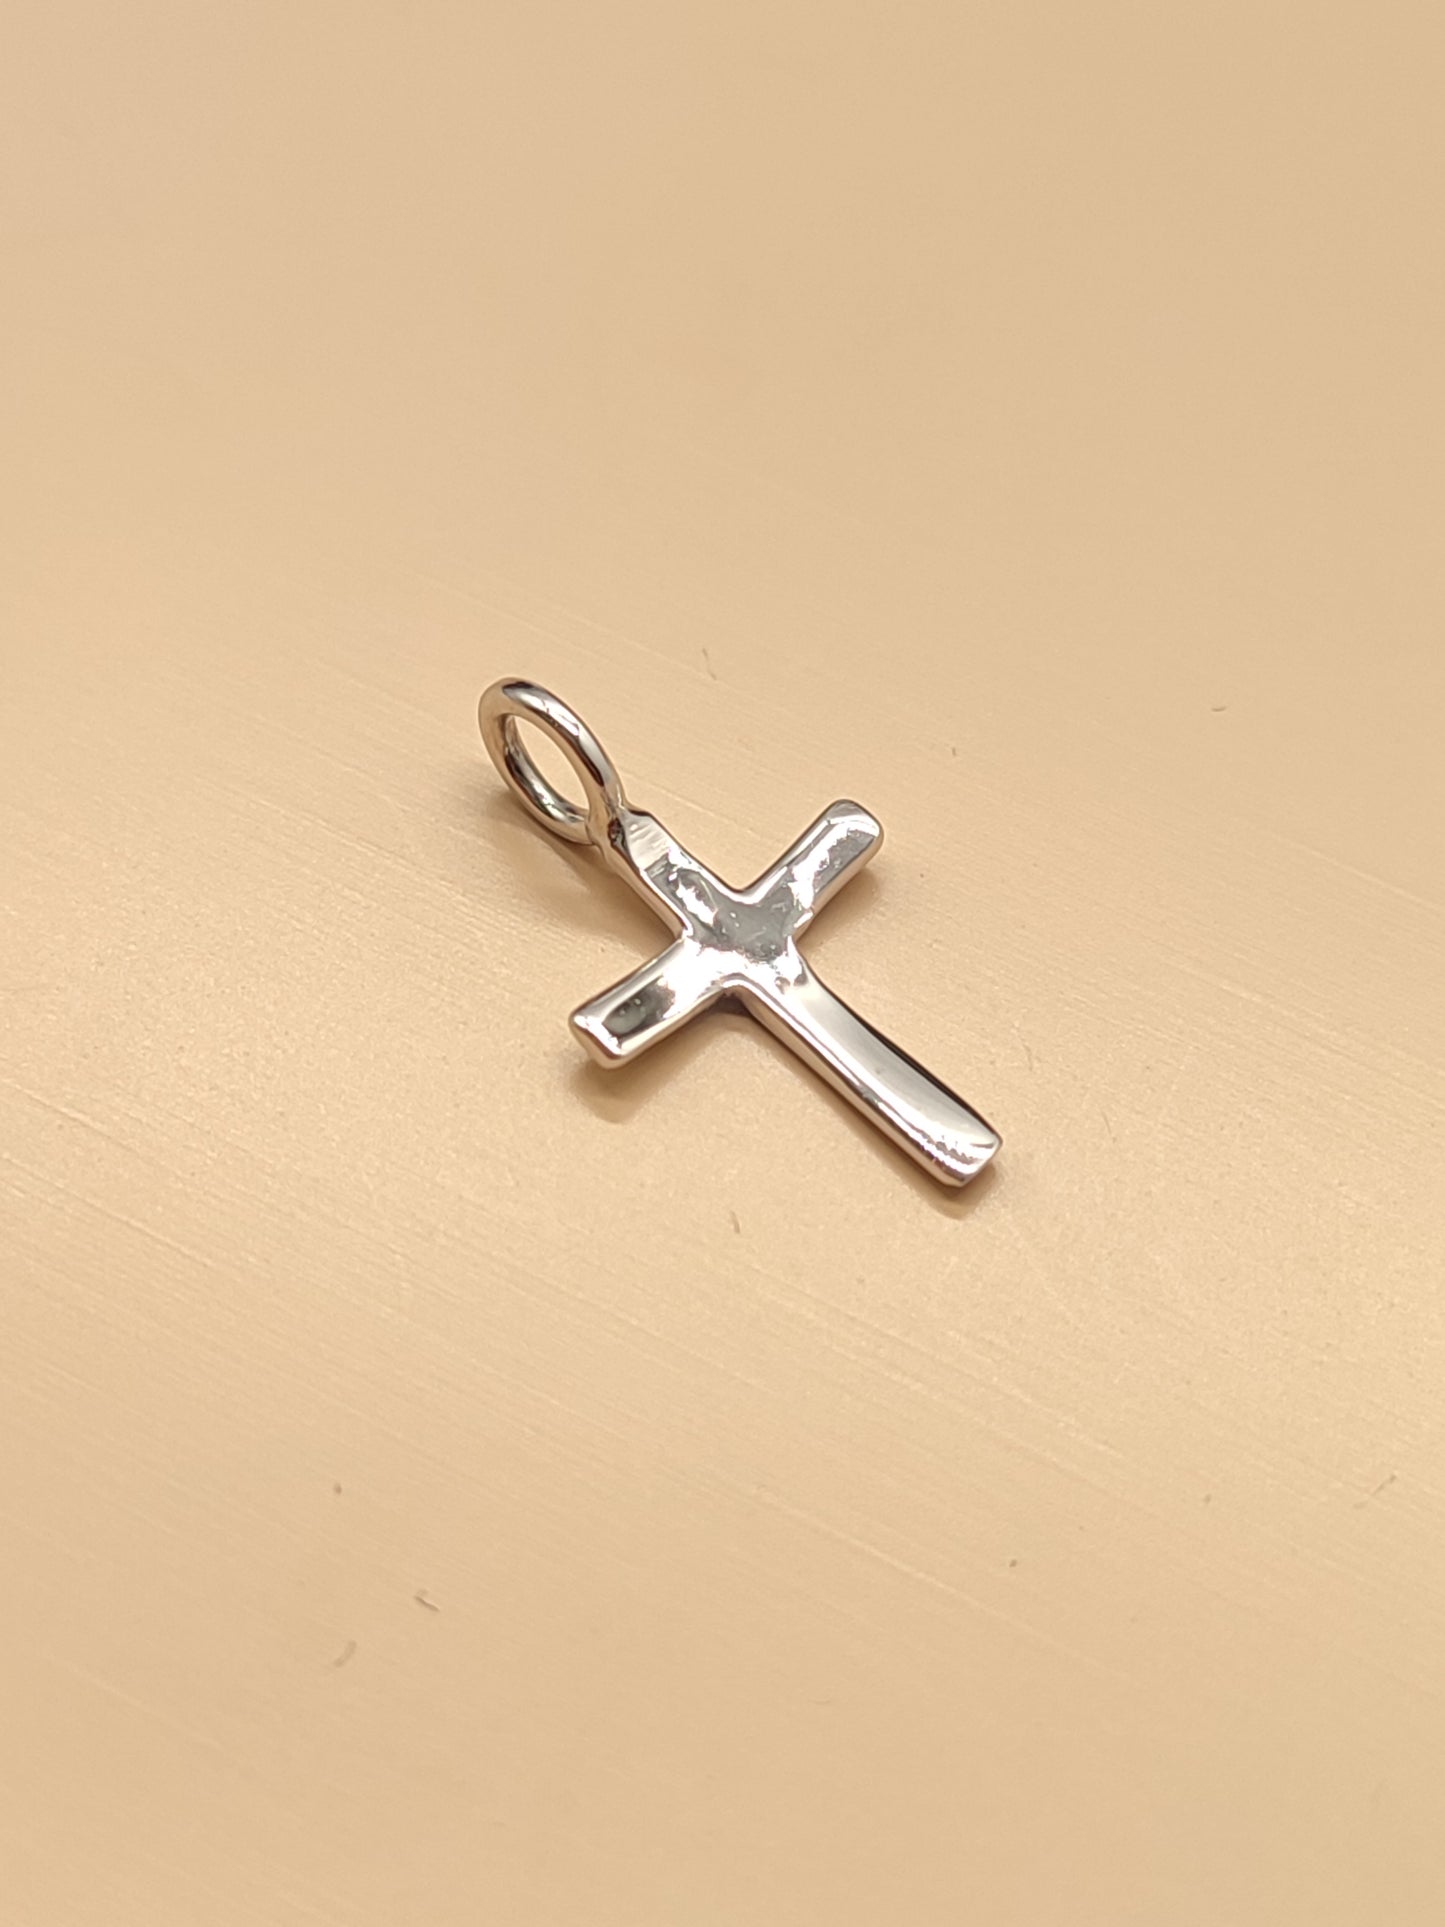 White gold small cross pendant